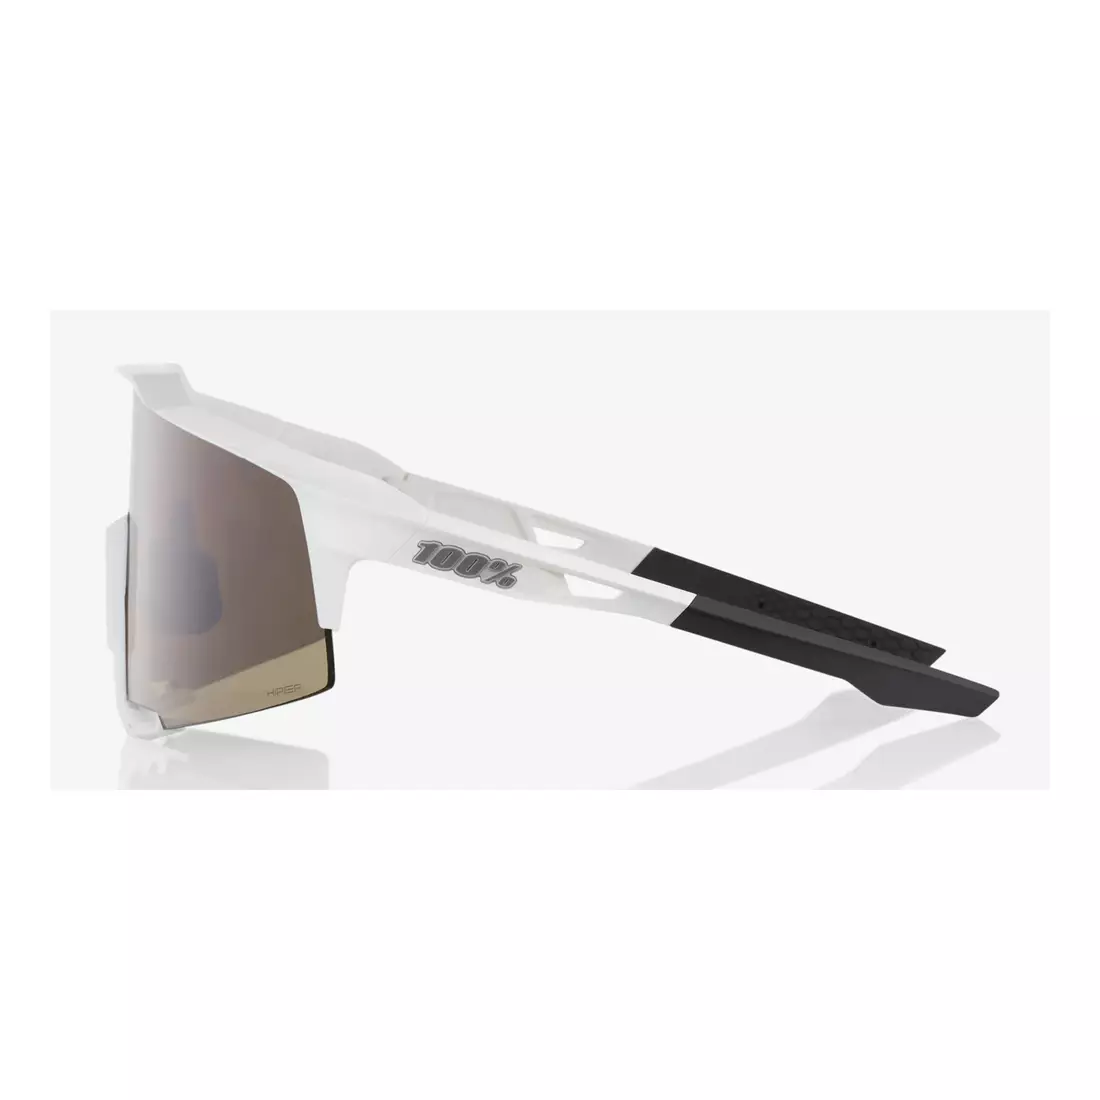 100% športové okuliare SPEEDCRAFT (HiPER Silver Mirror Lens) Matte White STO-61001-404-03